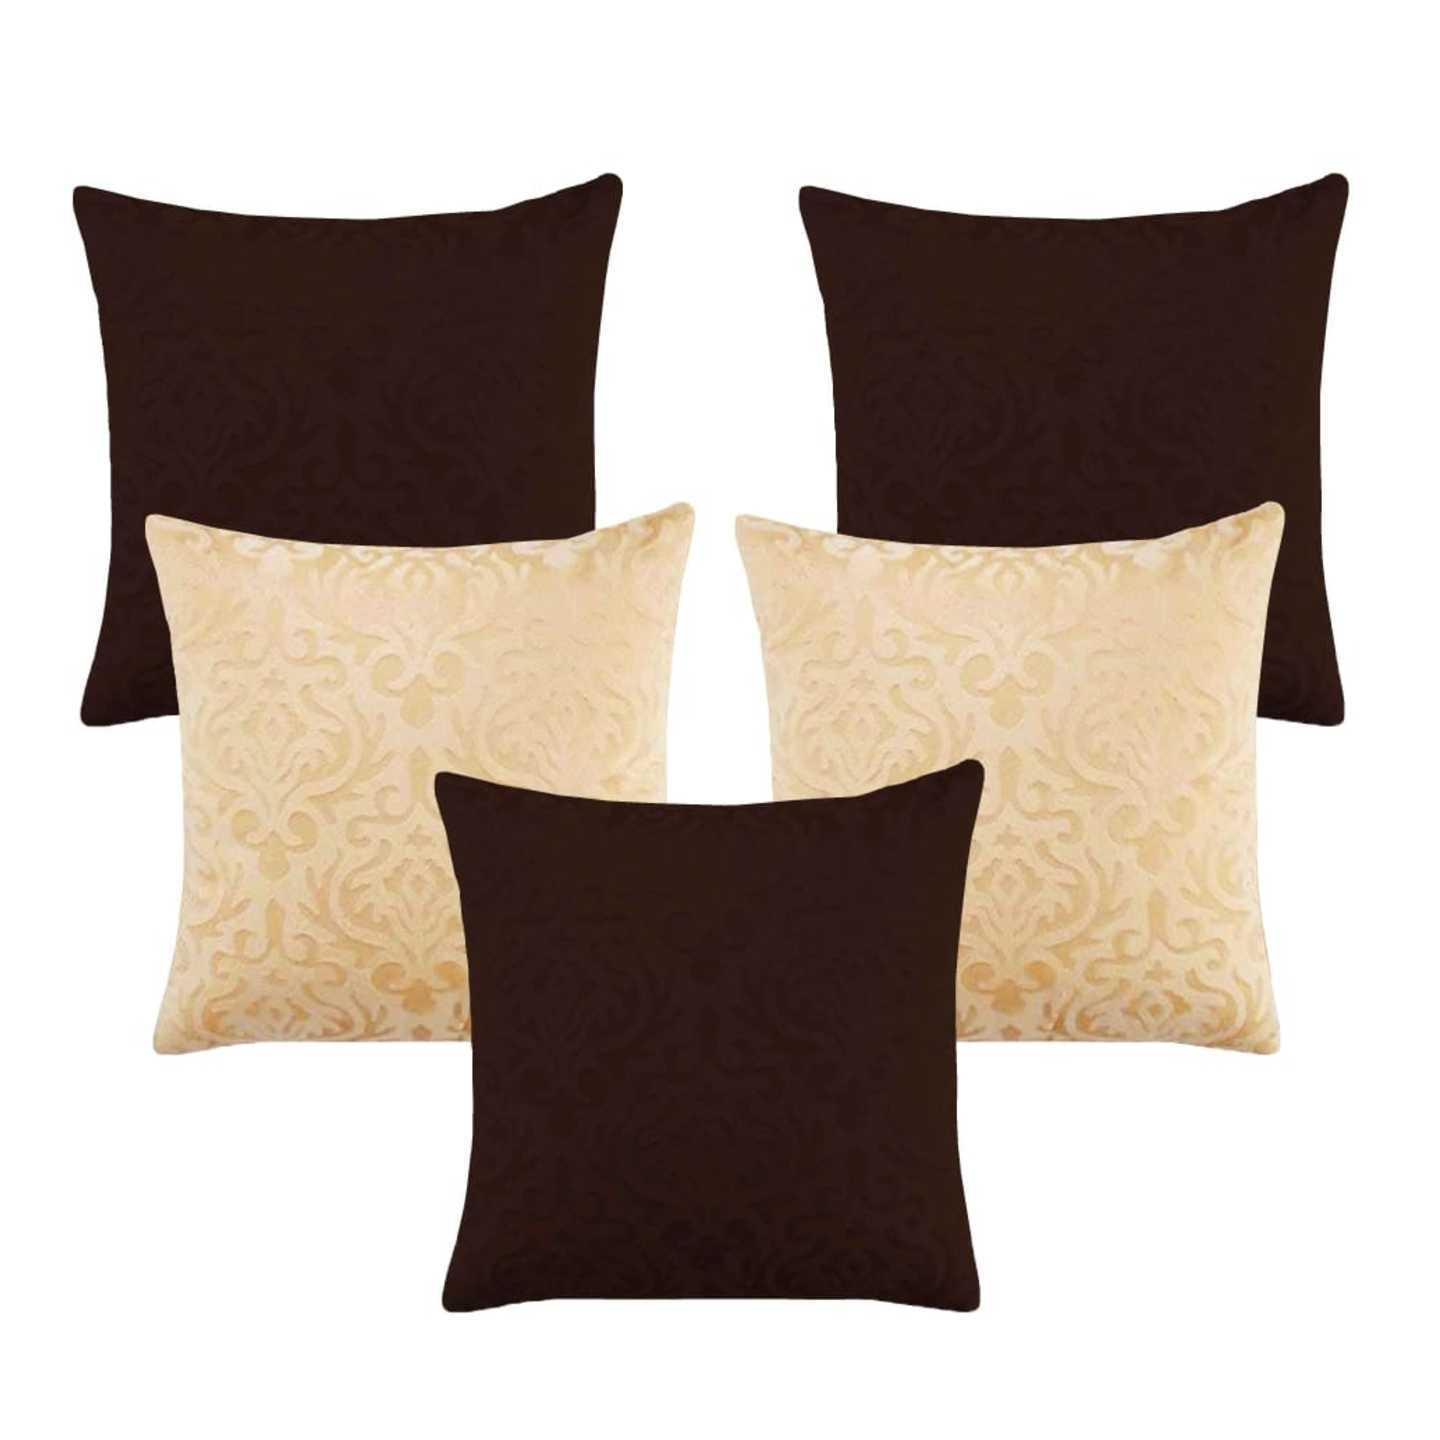 Handtex Home Velvet Cushion Covers 40.64x40.64 cm16x16 inches, Multicolour - Set of 5 Coffee - Beige